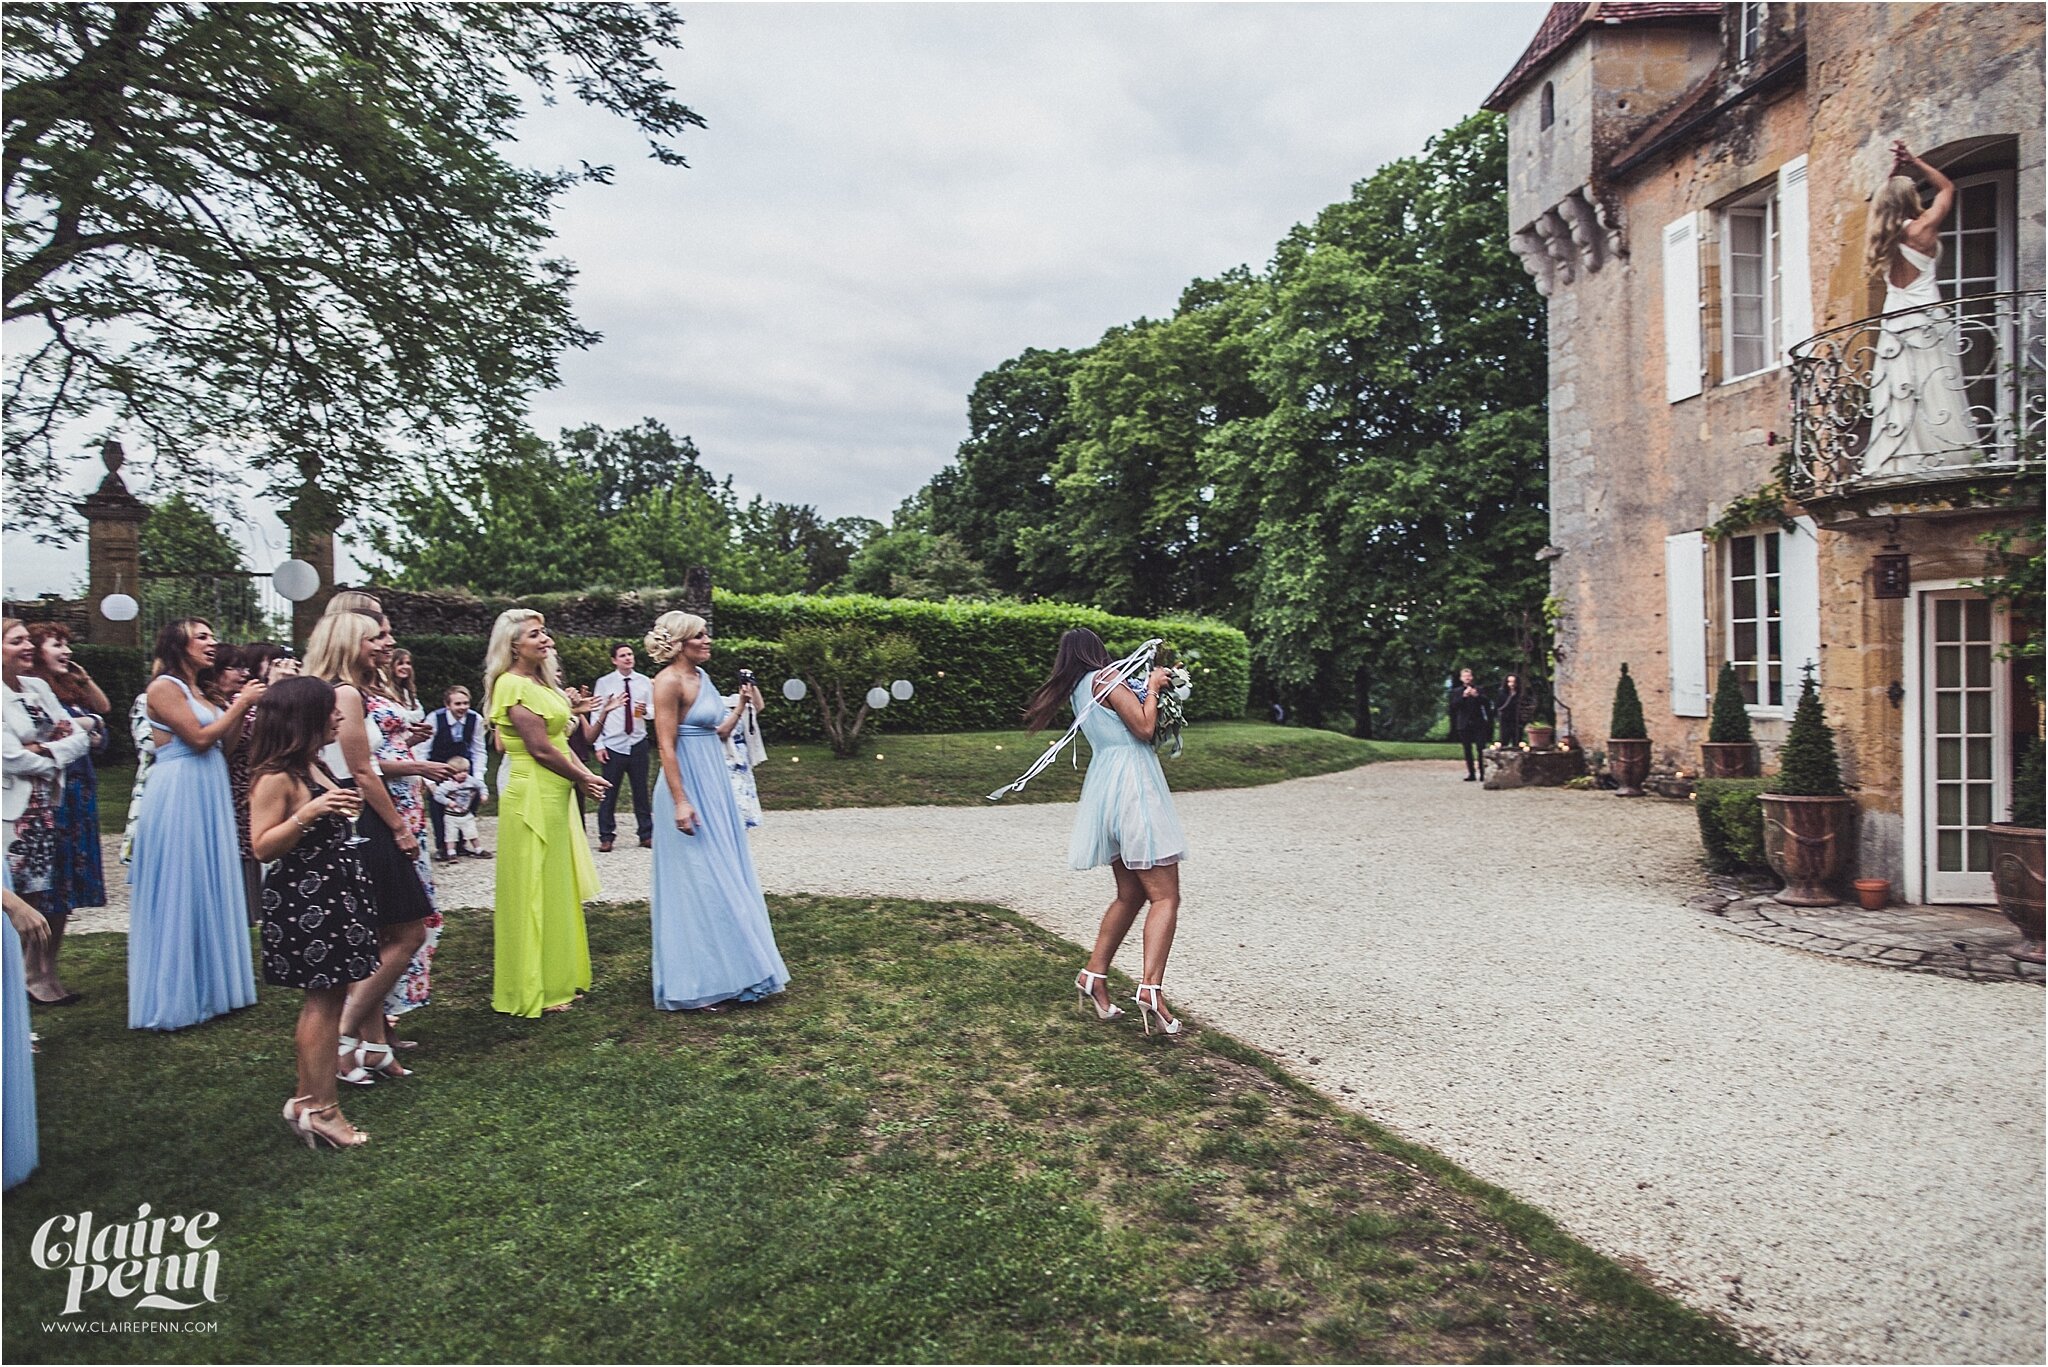 Beautiful blue wedding at a fairytale chateau in France - Davina & Ali ...